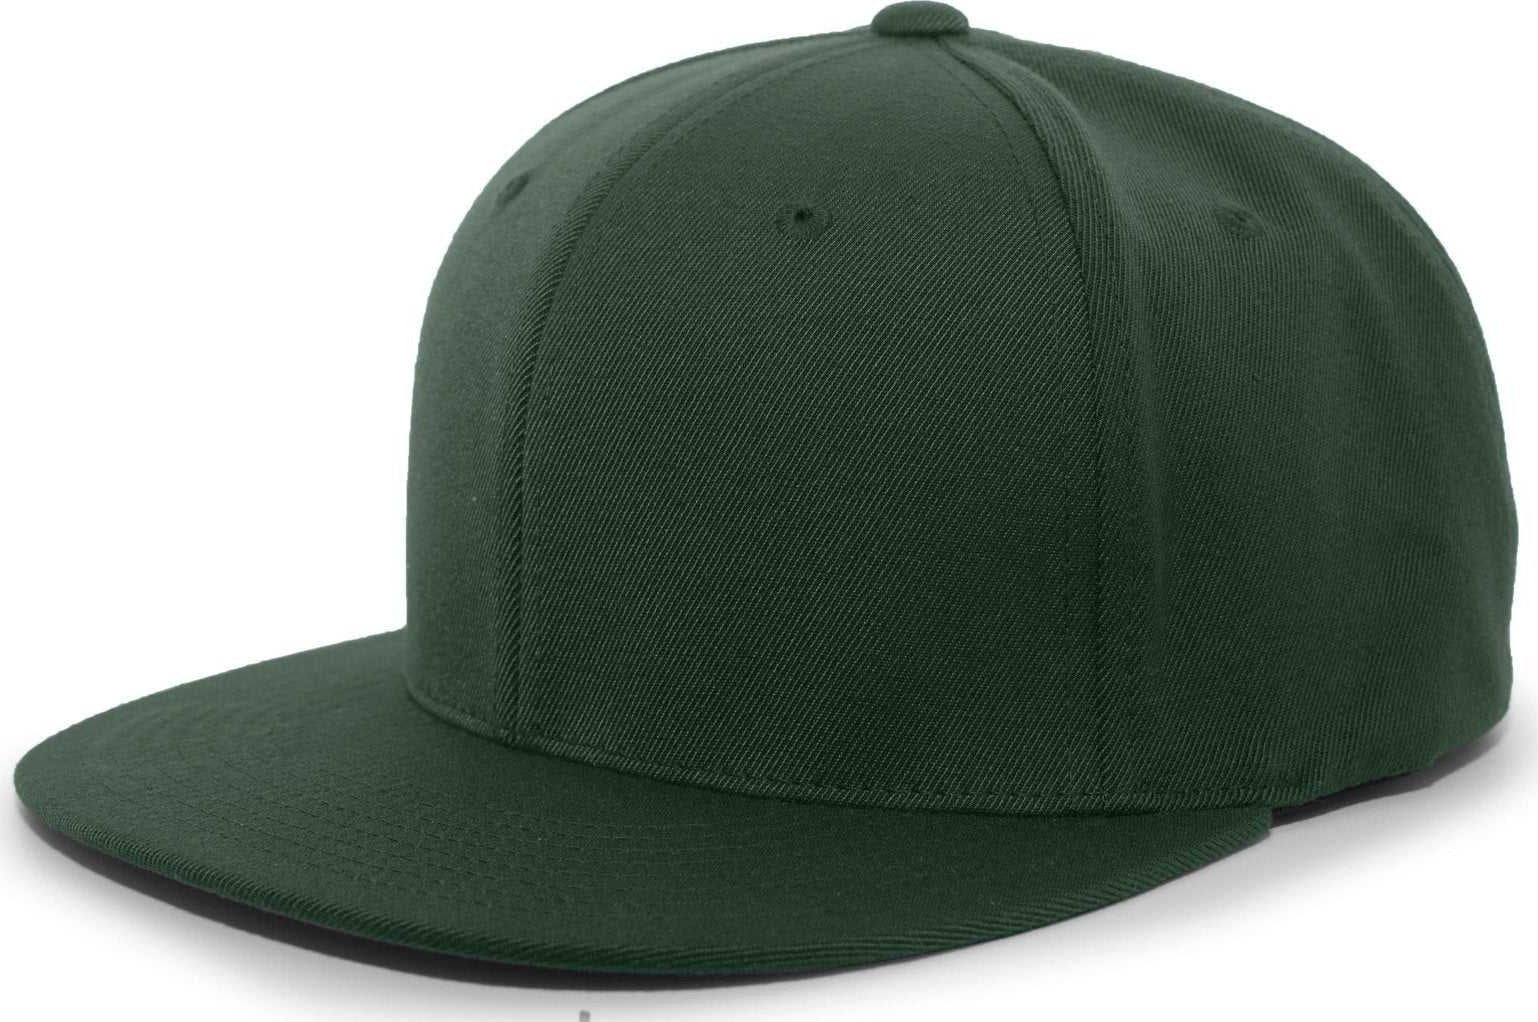 Pacific Headwear 8D5 A/C?ý Performance D-Series Flexfit Cap - Dark Green - HIT a Double